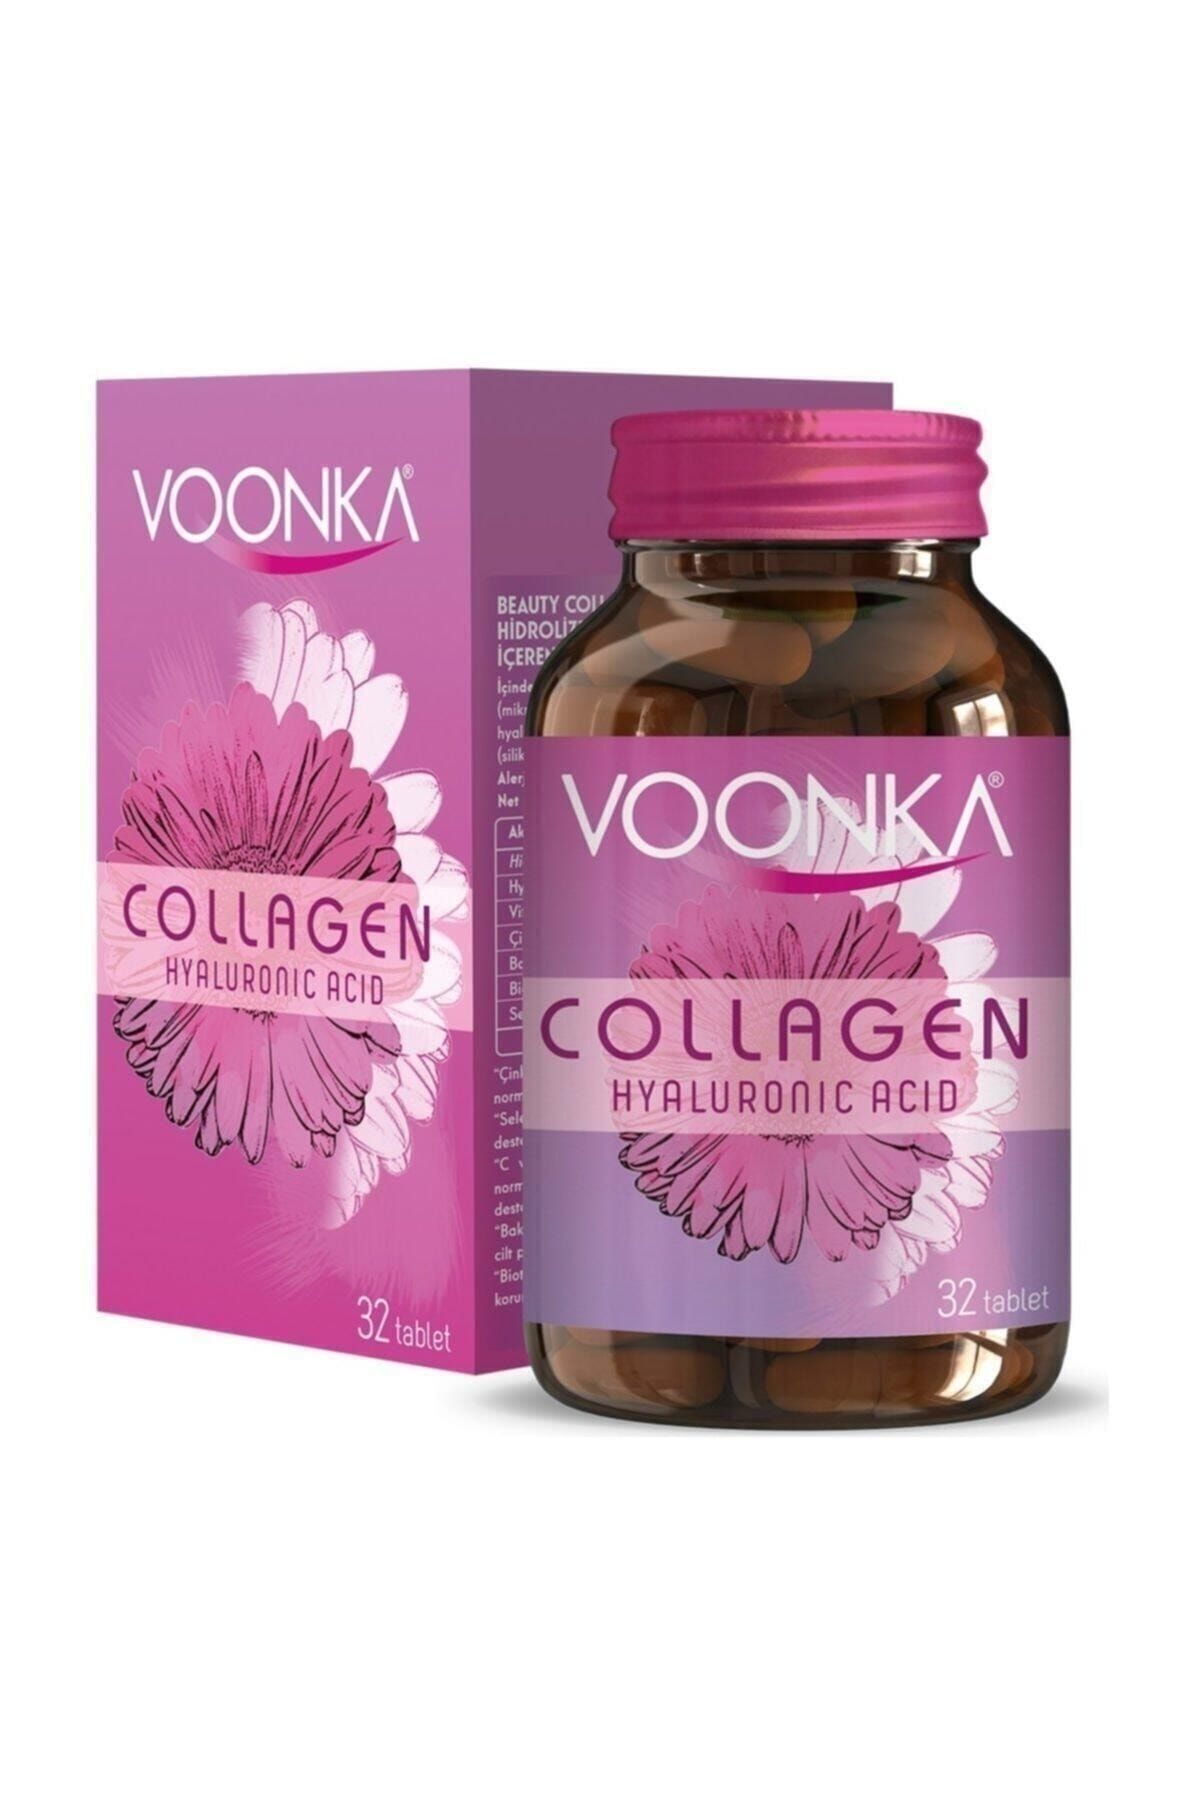 Voonka Collagen Hyaluronic Acid 32 Tablet (32 GÜNLÜK)